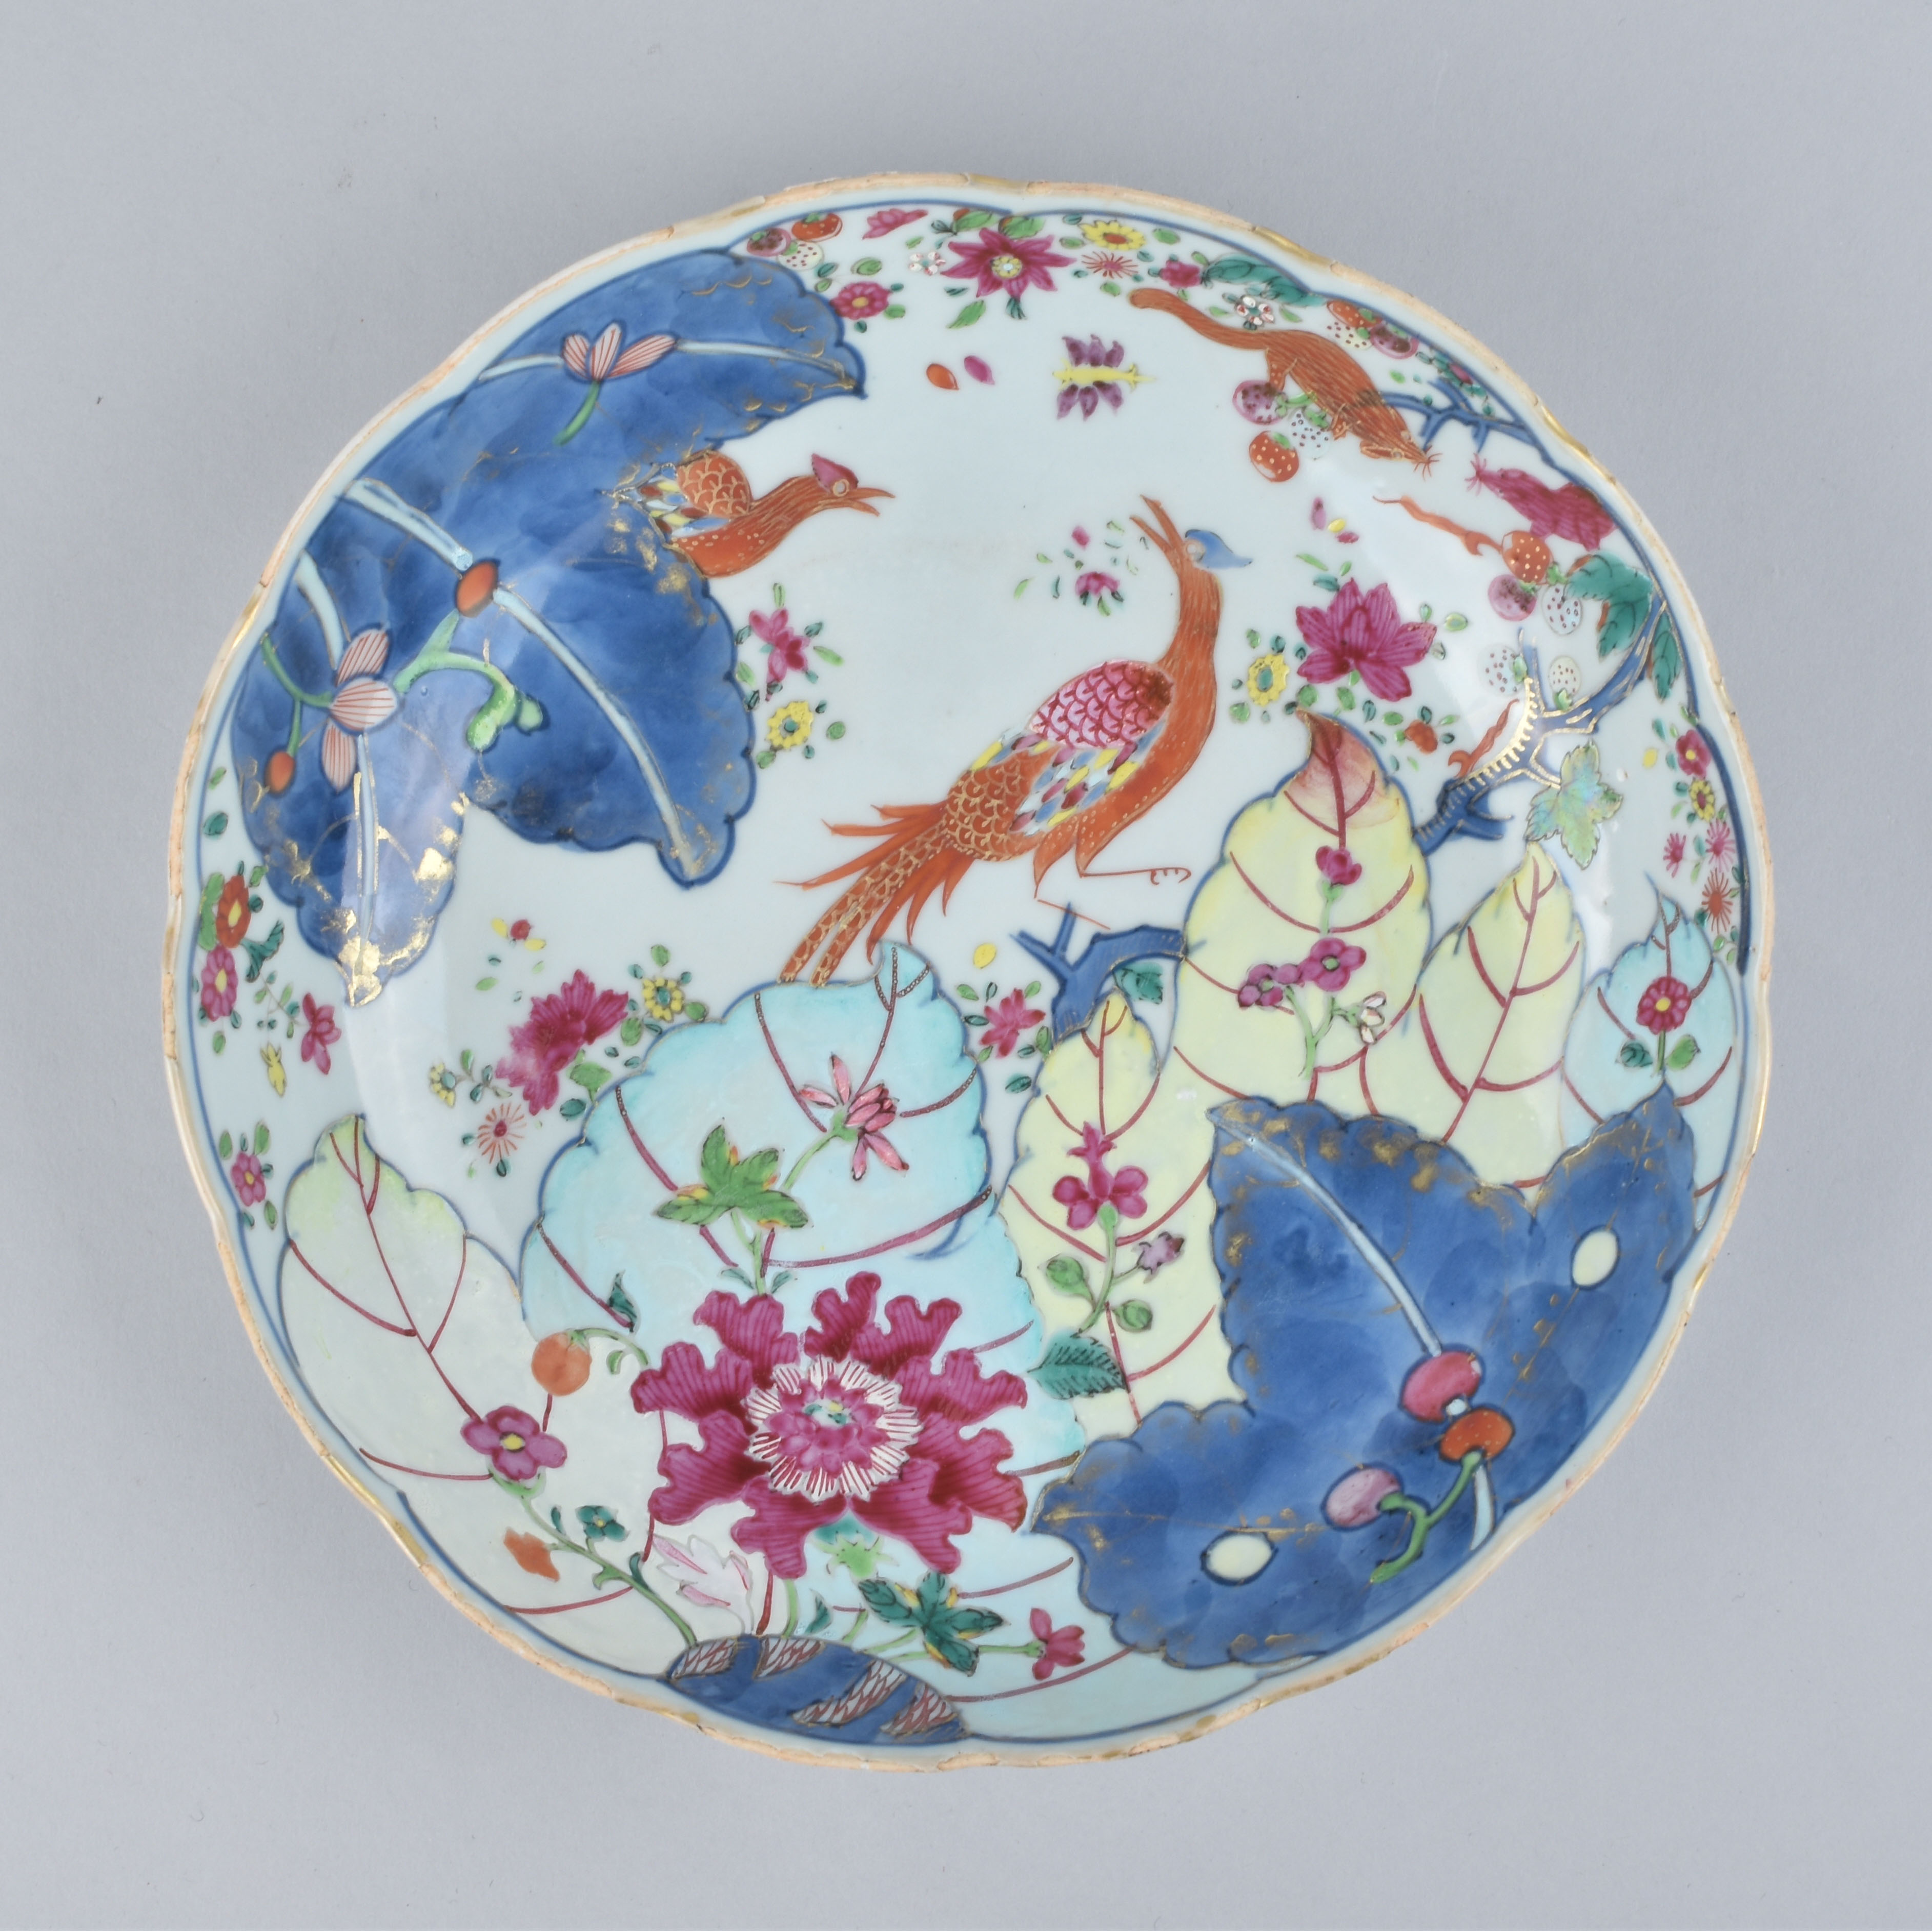 Porcelaine Qianlong (1735-1795), circa 1775, Chine